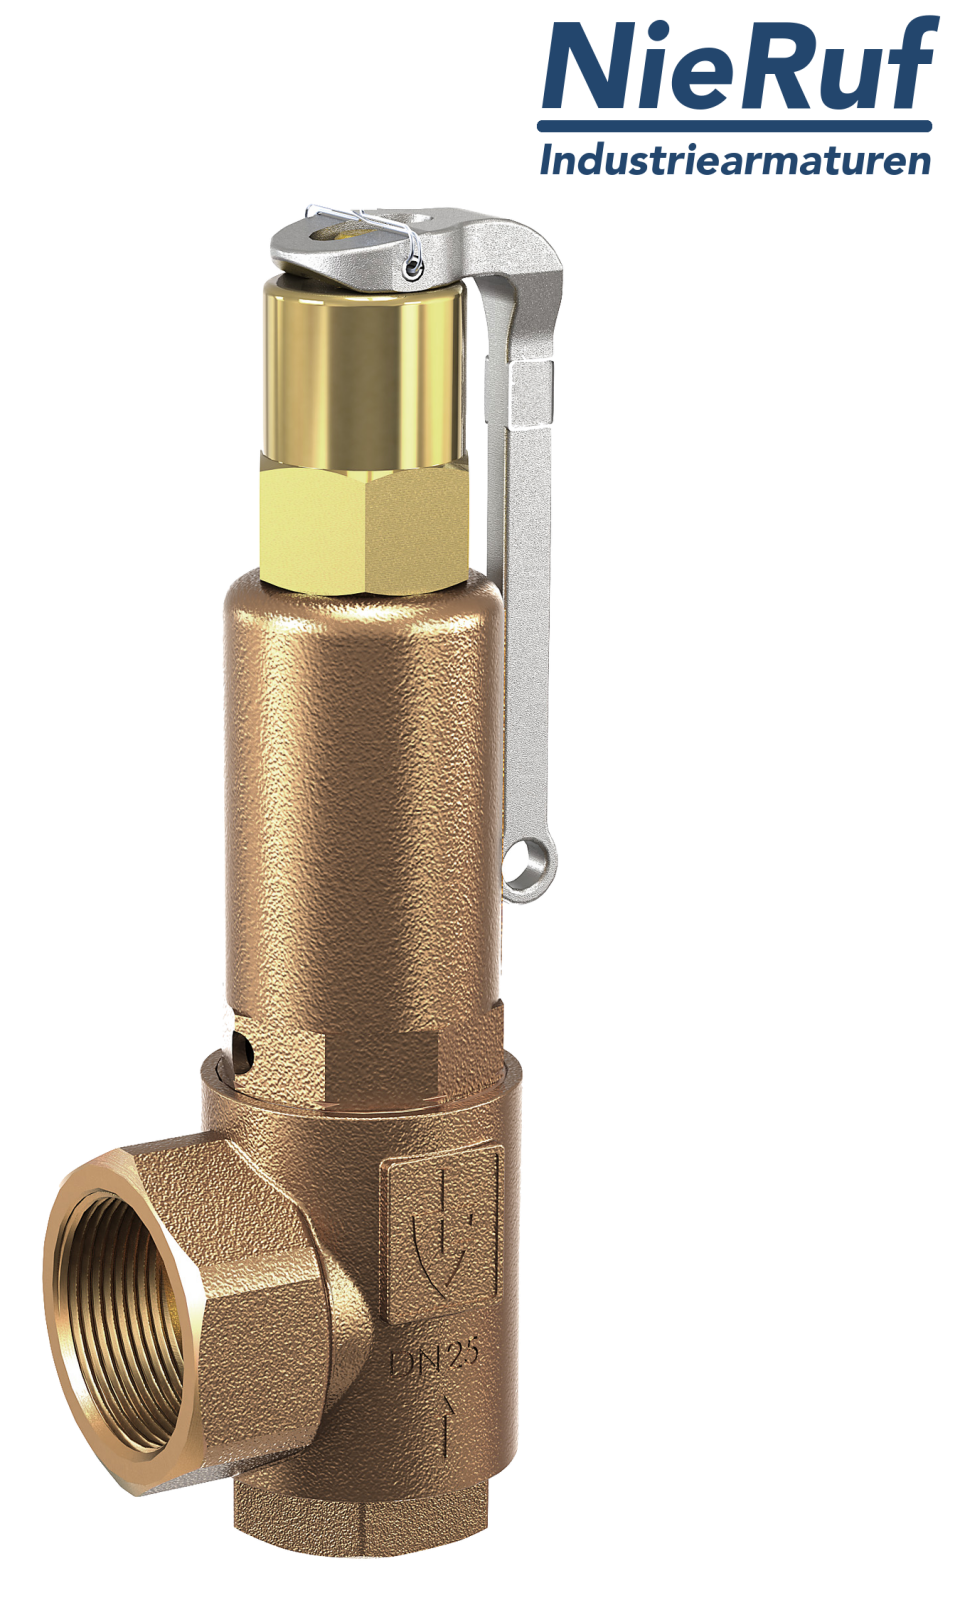 safety valve 2" x 2" fm SV07 neutral gaseous media, gunmetal FKM, with lever